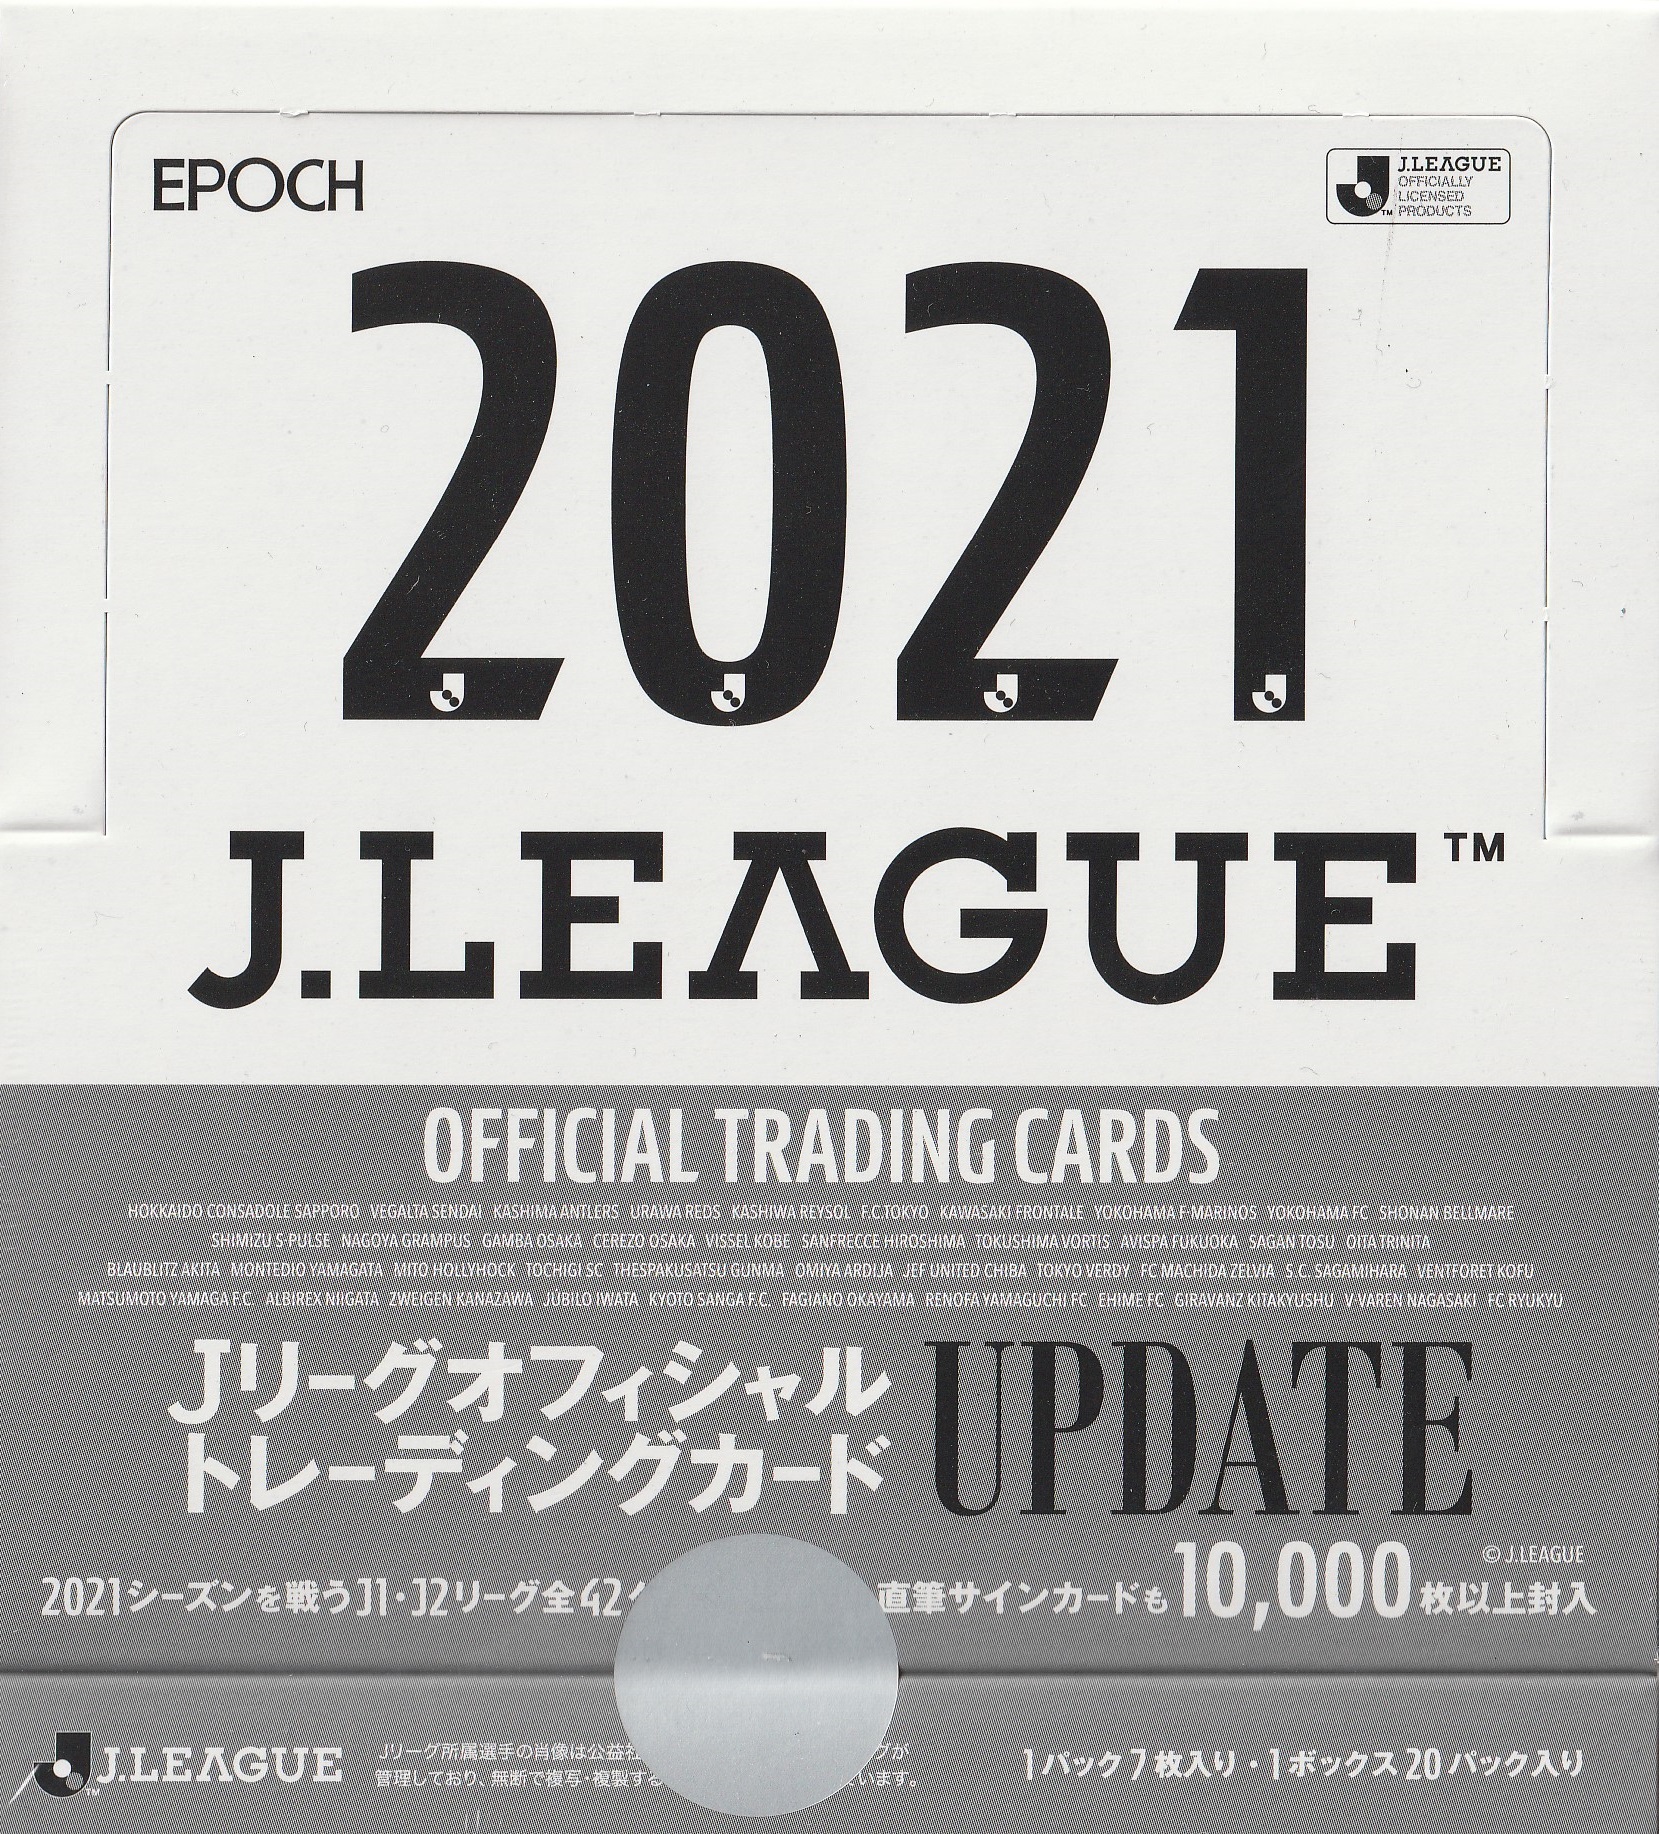 ⚽ EPOCH 2021 Jリーグオフィシャルトレーディングカード UPDATE【製品情報】 | Trading Card Journal